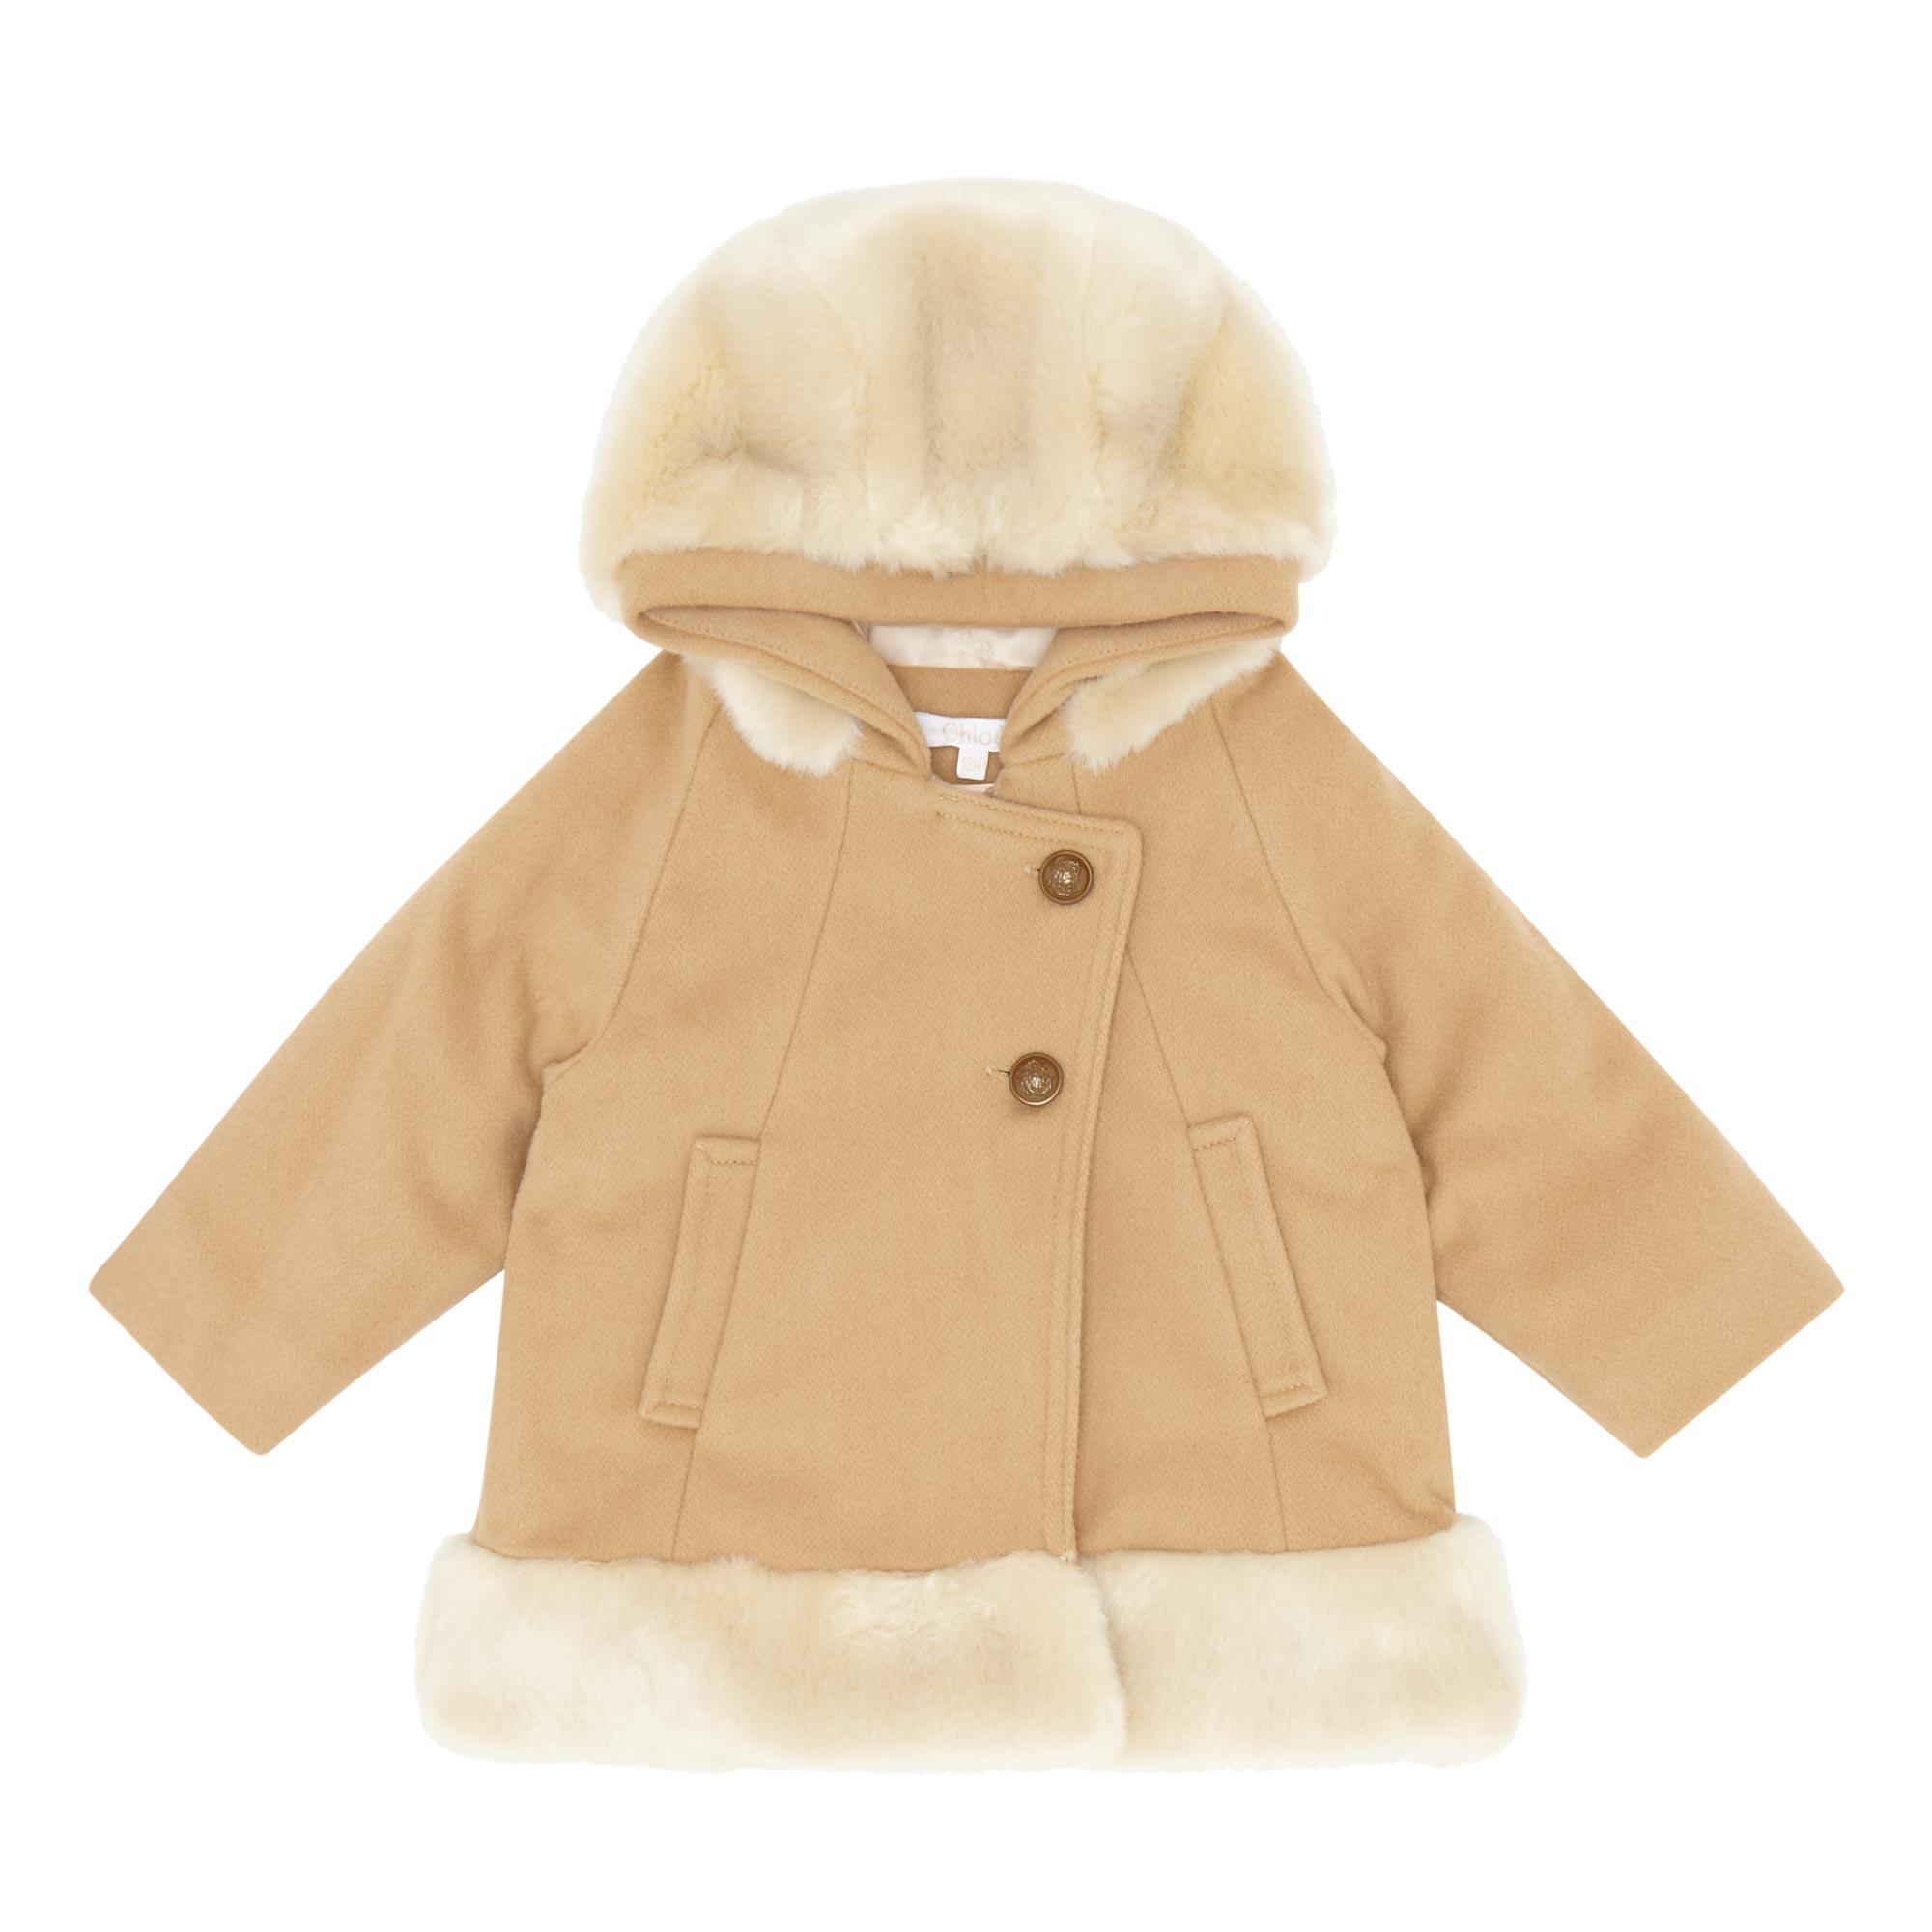 Faux Fur Wool-Blend Coat